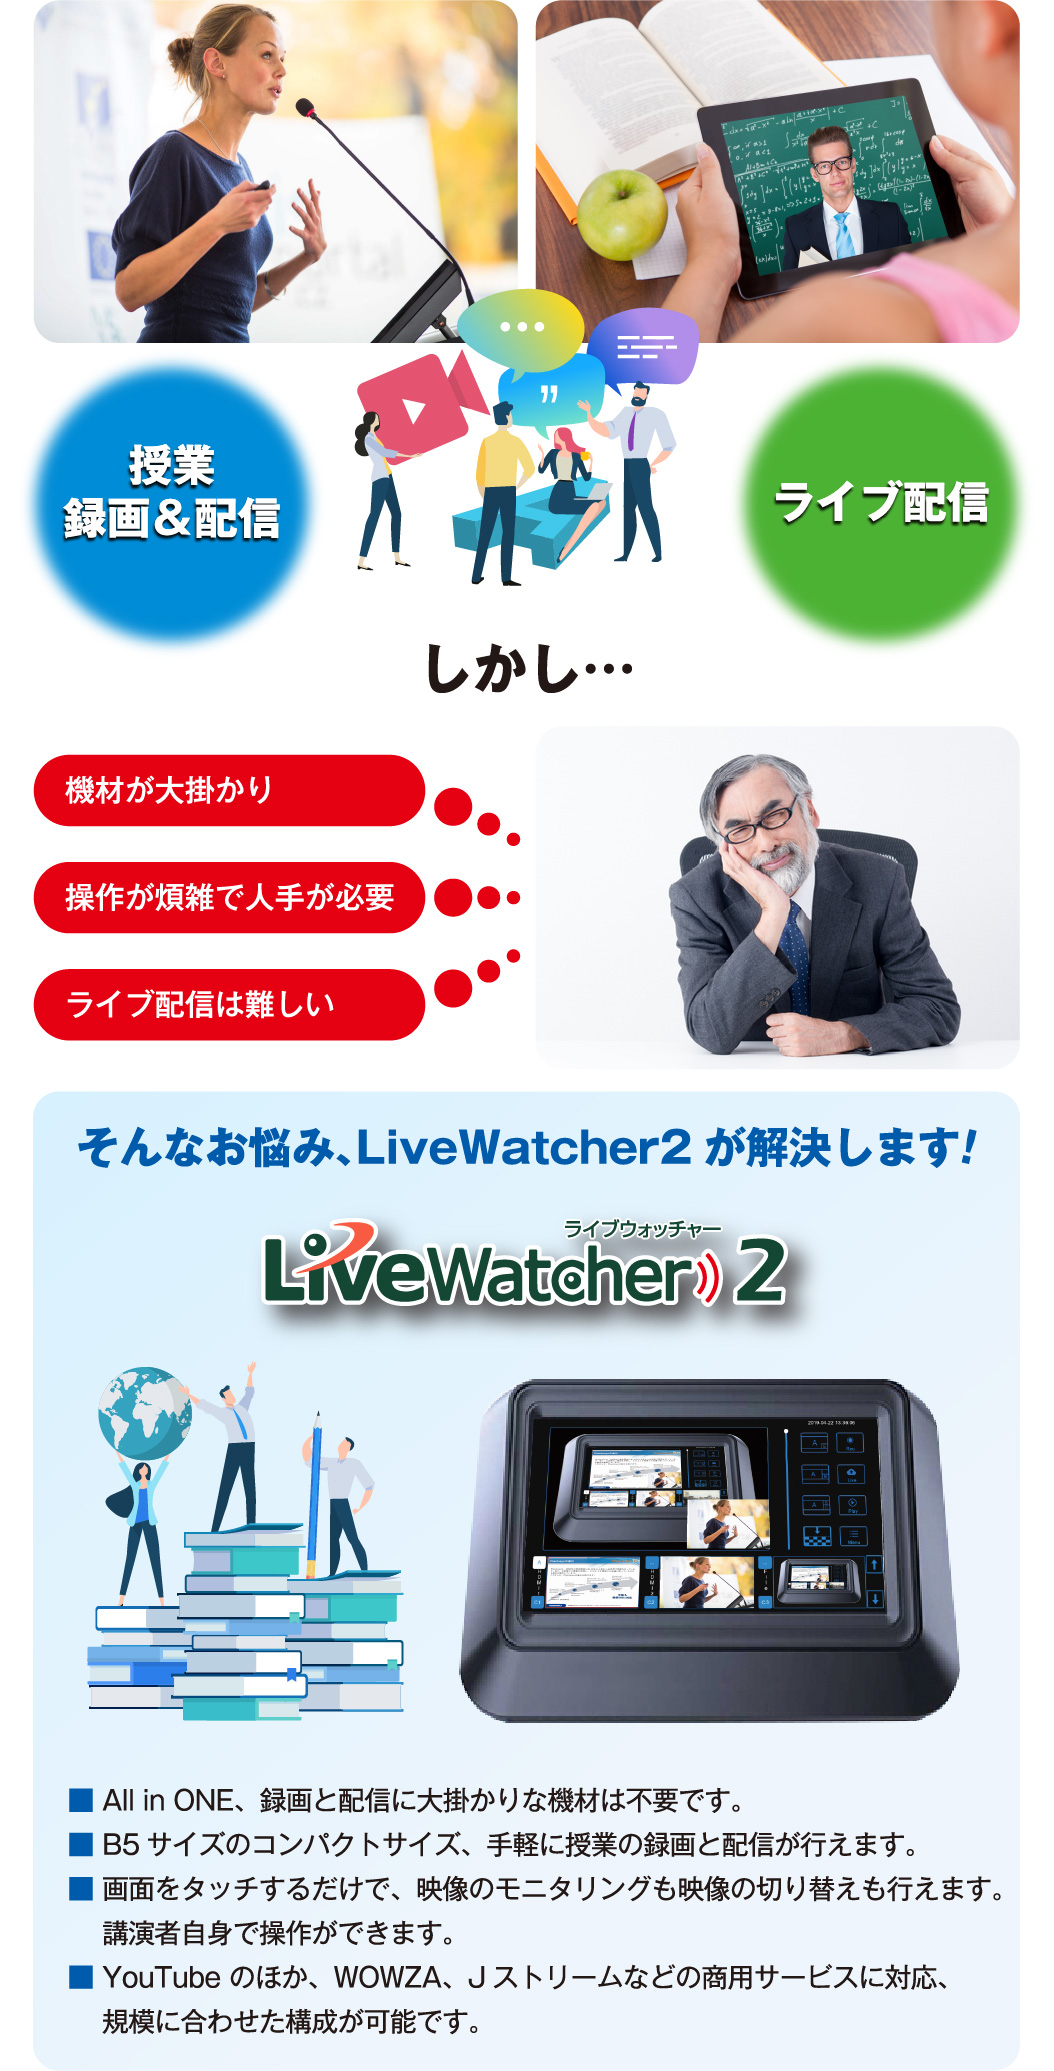 LiveWatcher2 概要 | ワッセイ・ソフトウェア・テクノロジー